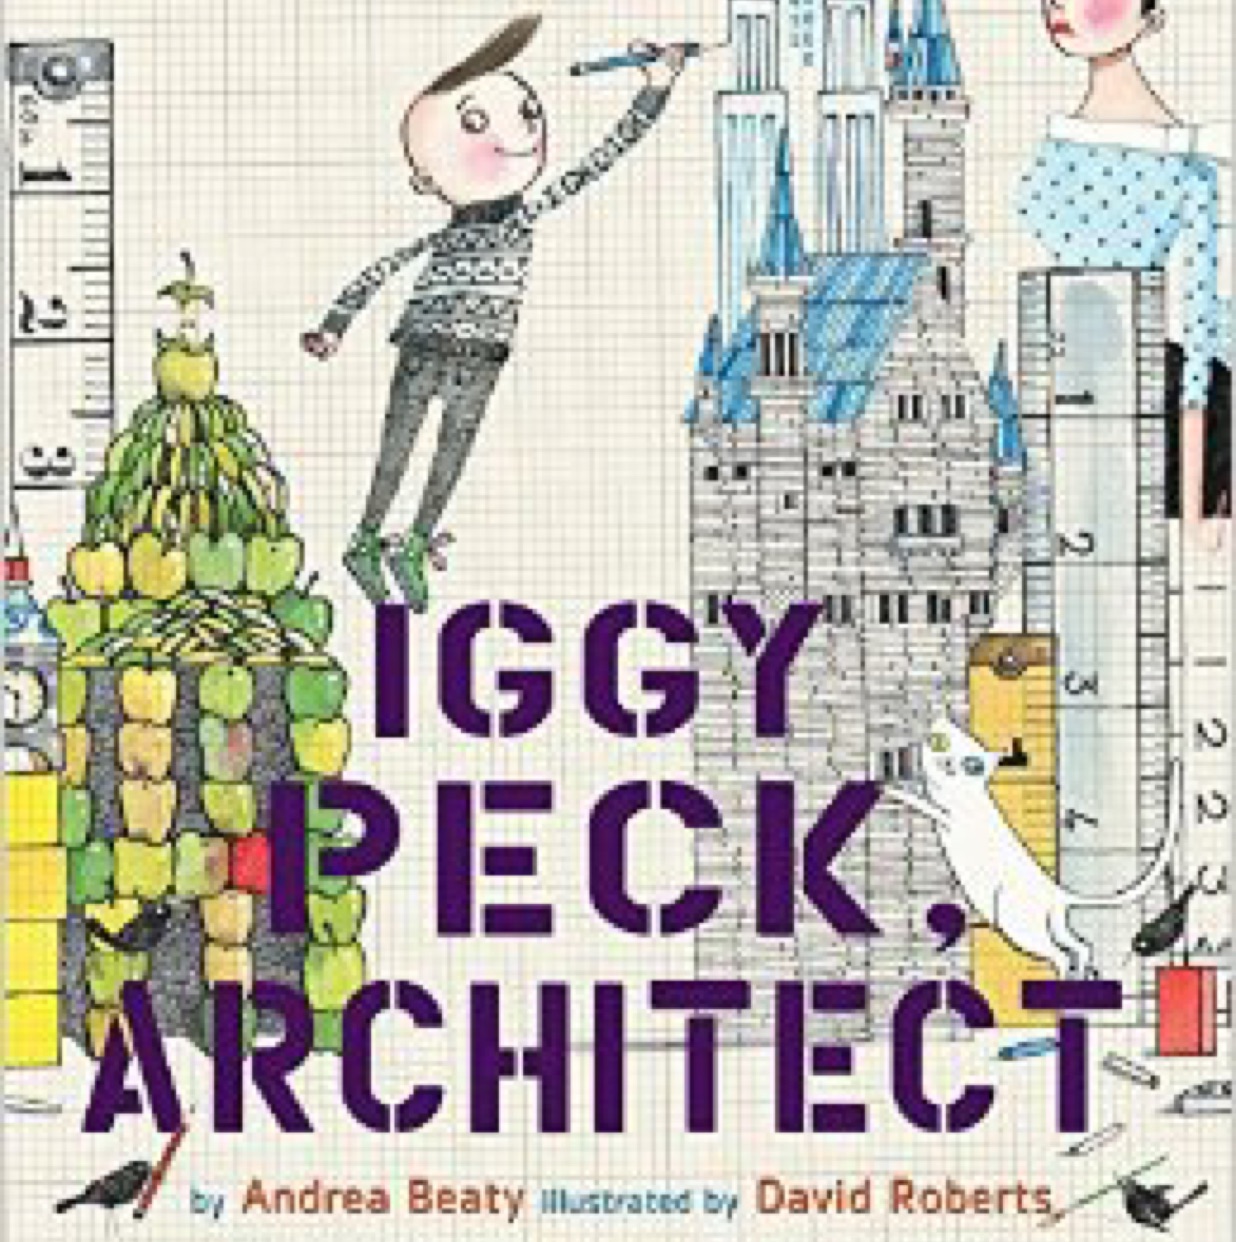 Nov 20, 2016 21:55 Iggy Peck, architect